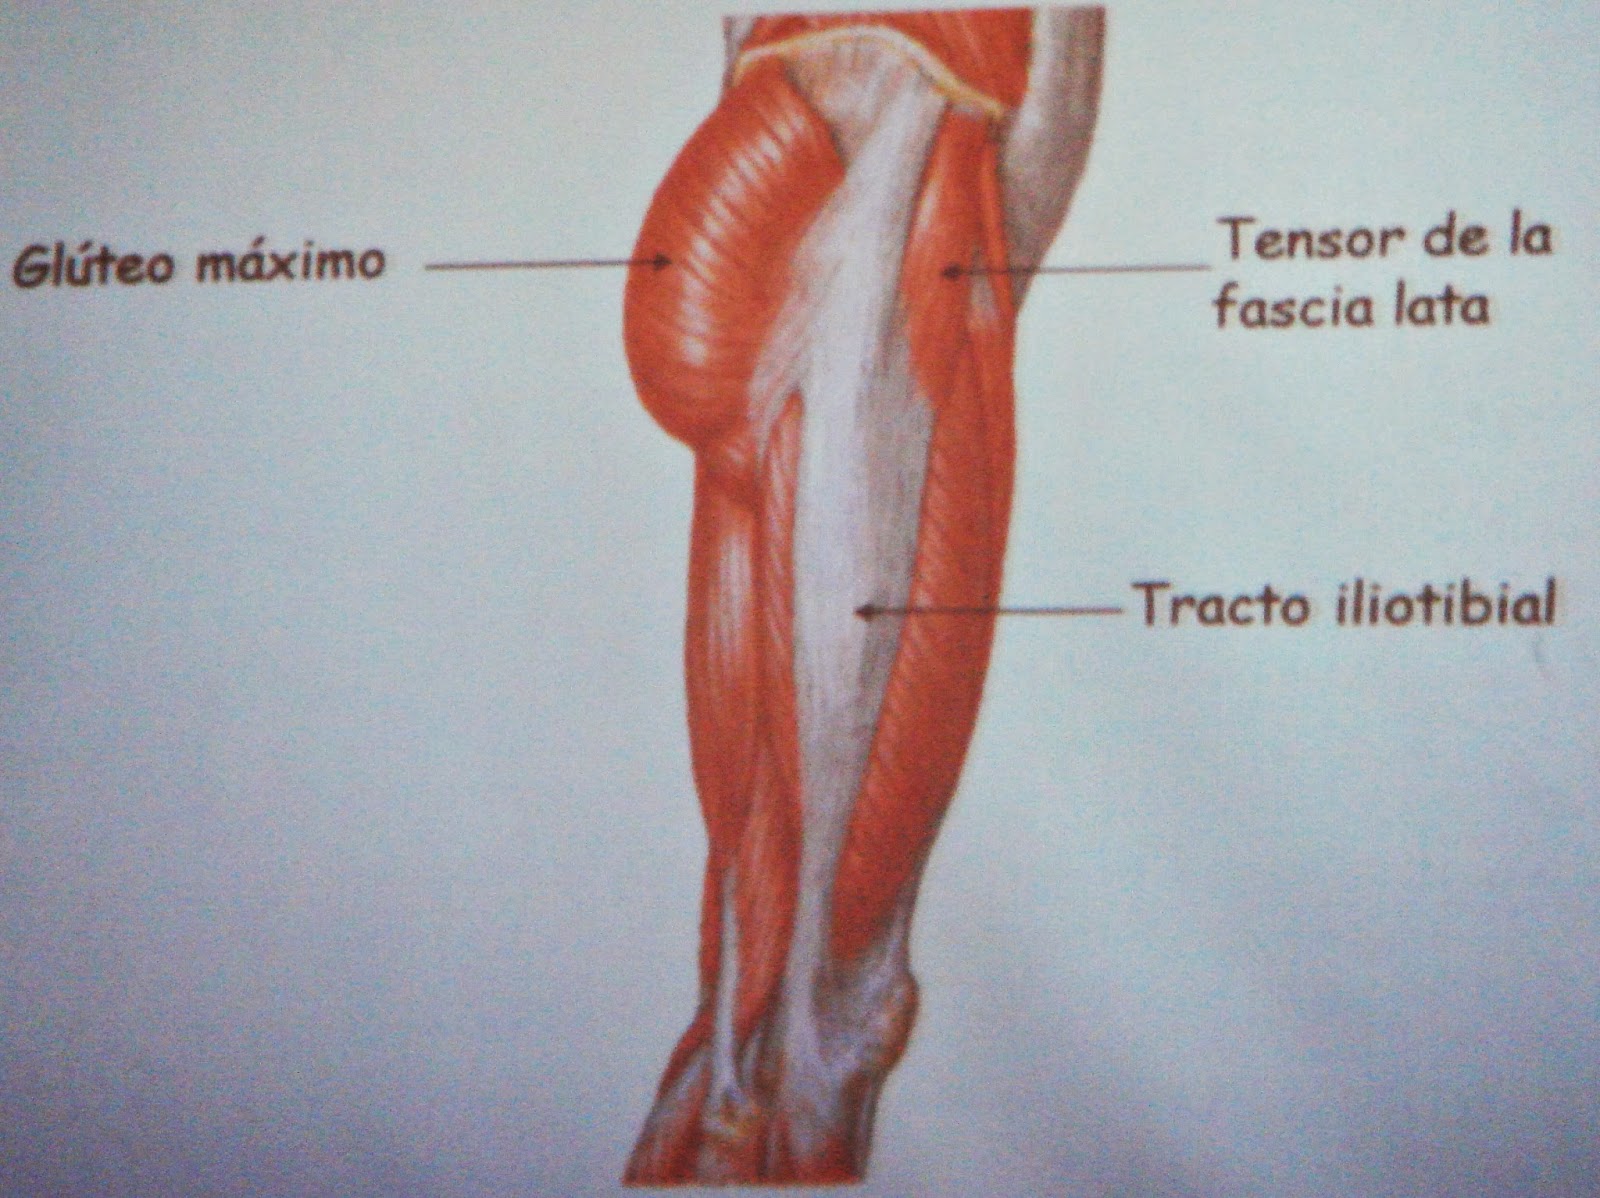 musculos del miembro inferior morfologia humana - instagram mhg twgram